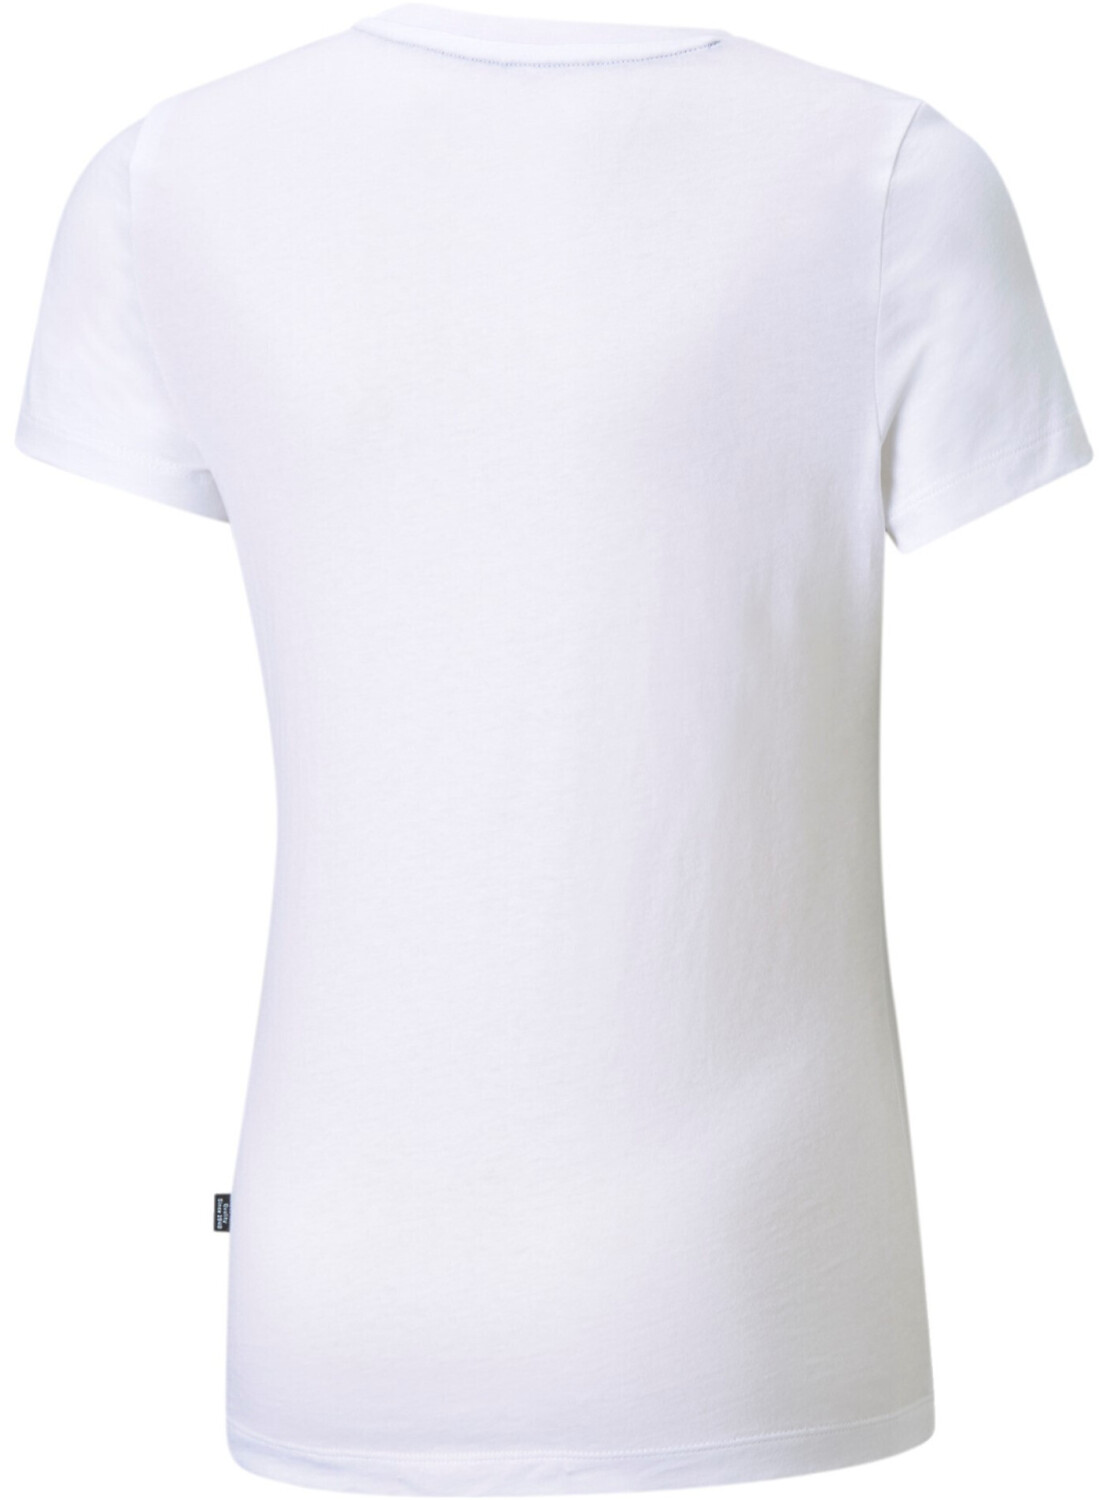 Puma Mädchen T-Shirt (587029-02) white ab 9,22 € | Preisvergleich bei